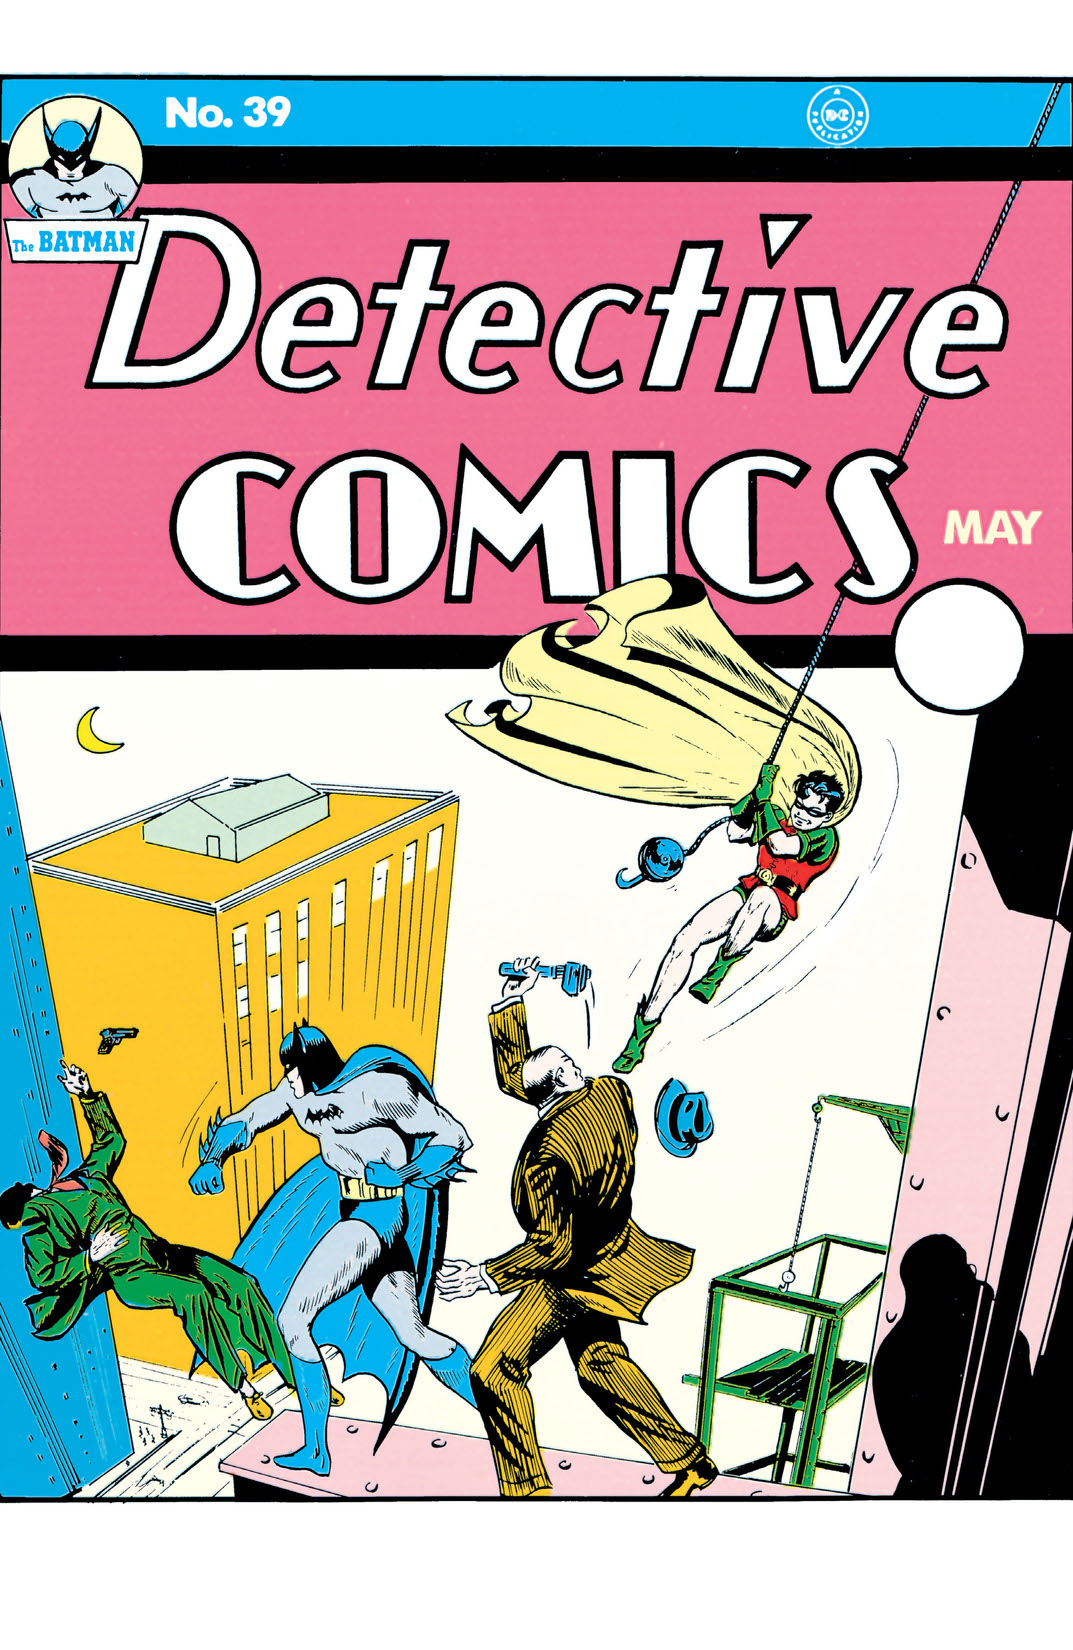 Detective Comics (1937-) #39 preview images